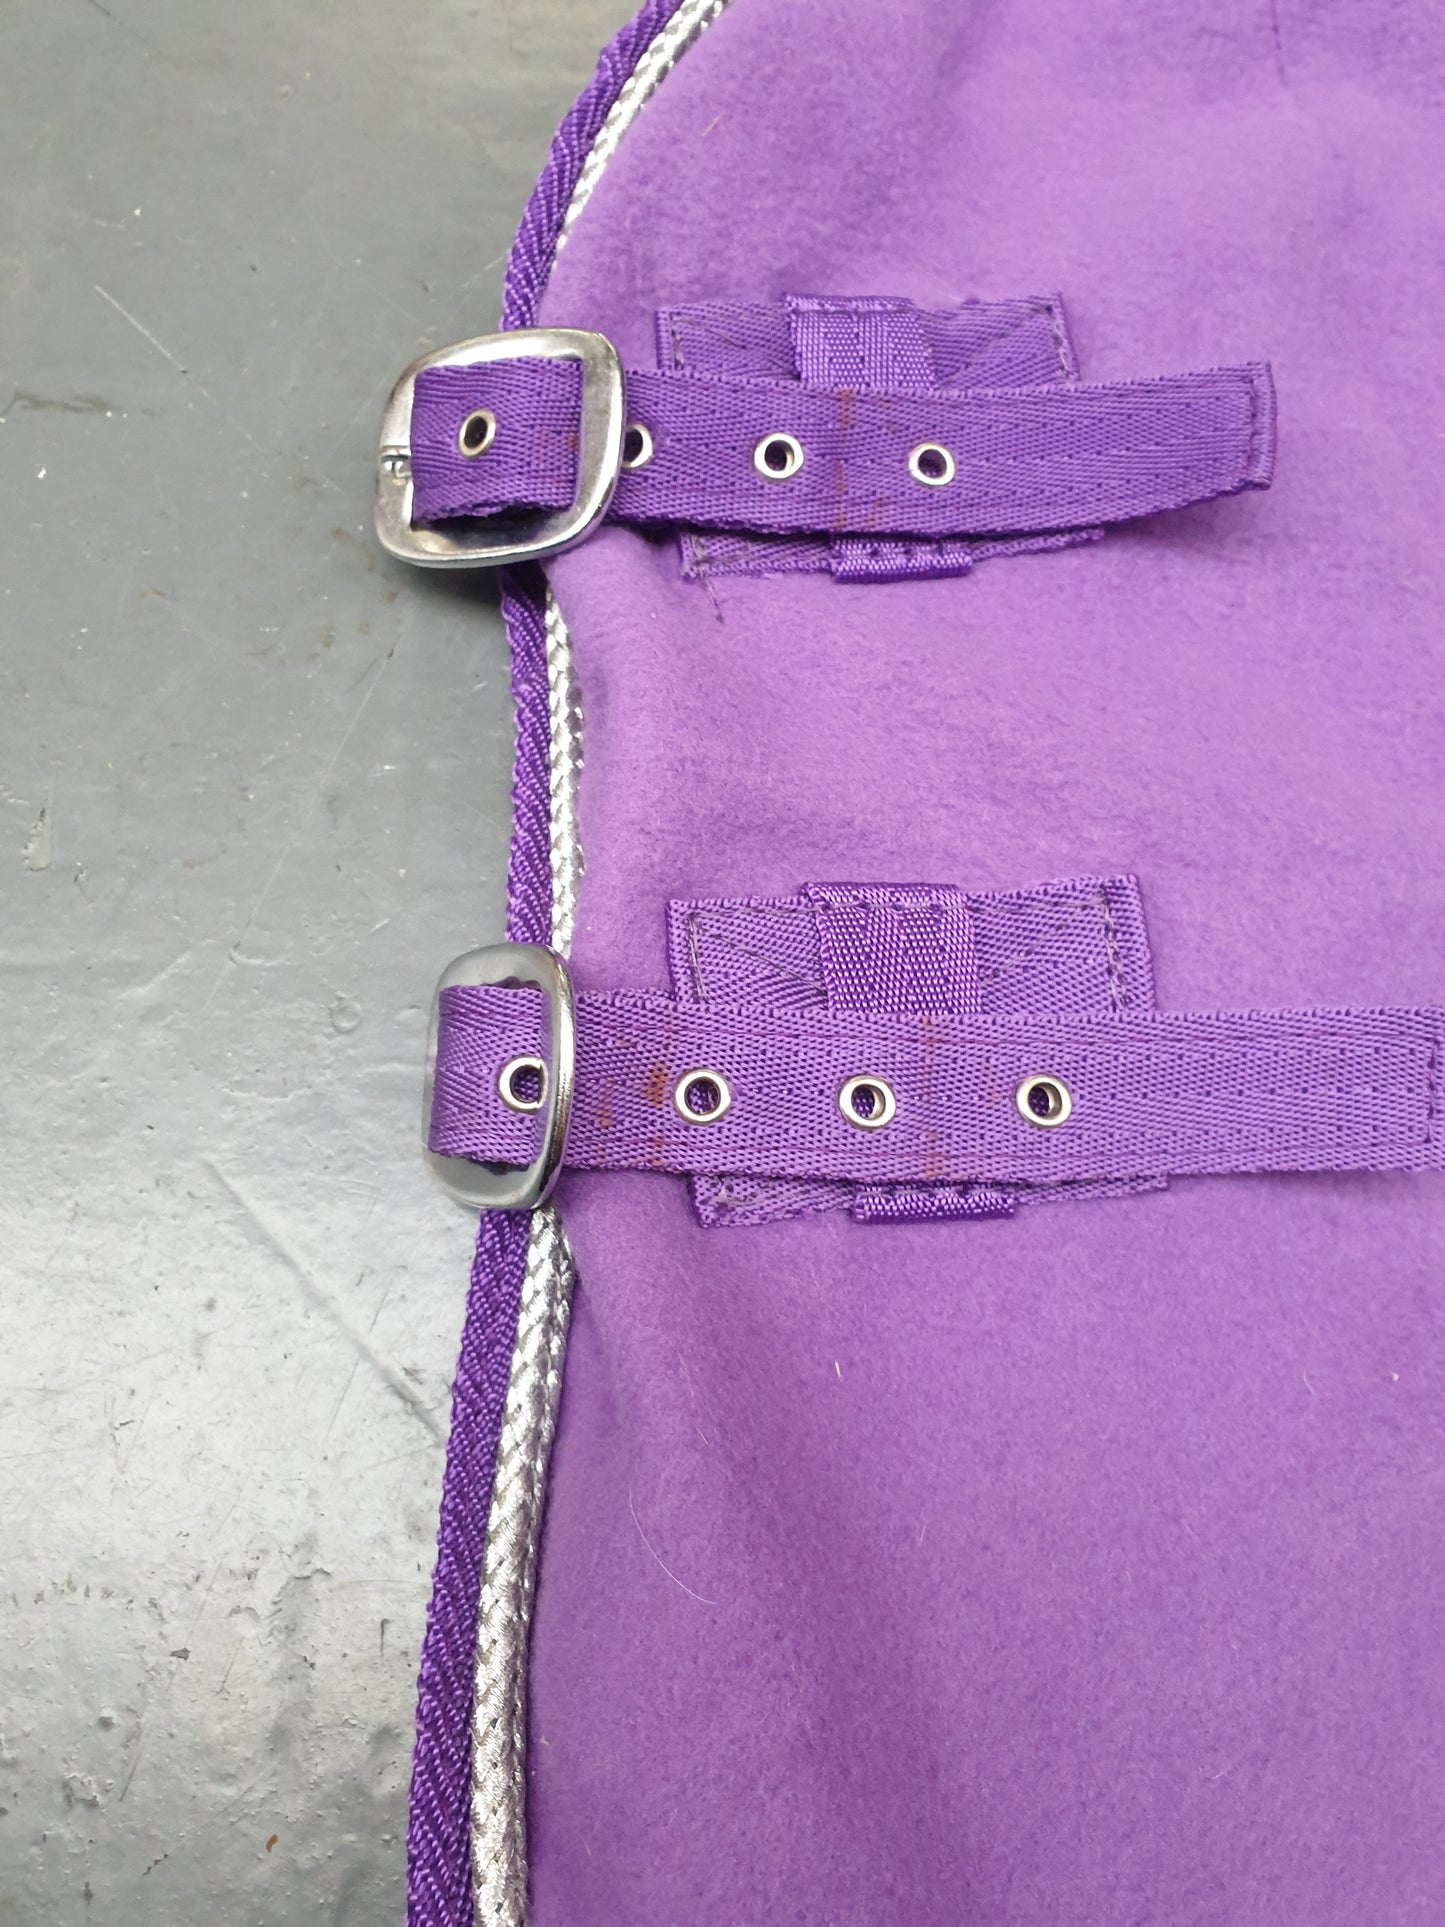 New shop marked 4'0" purple fleece FREE POSTAGE❤️